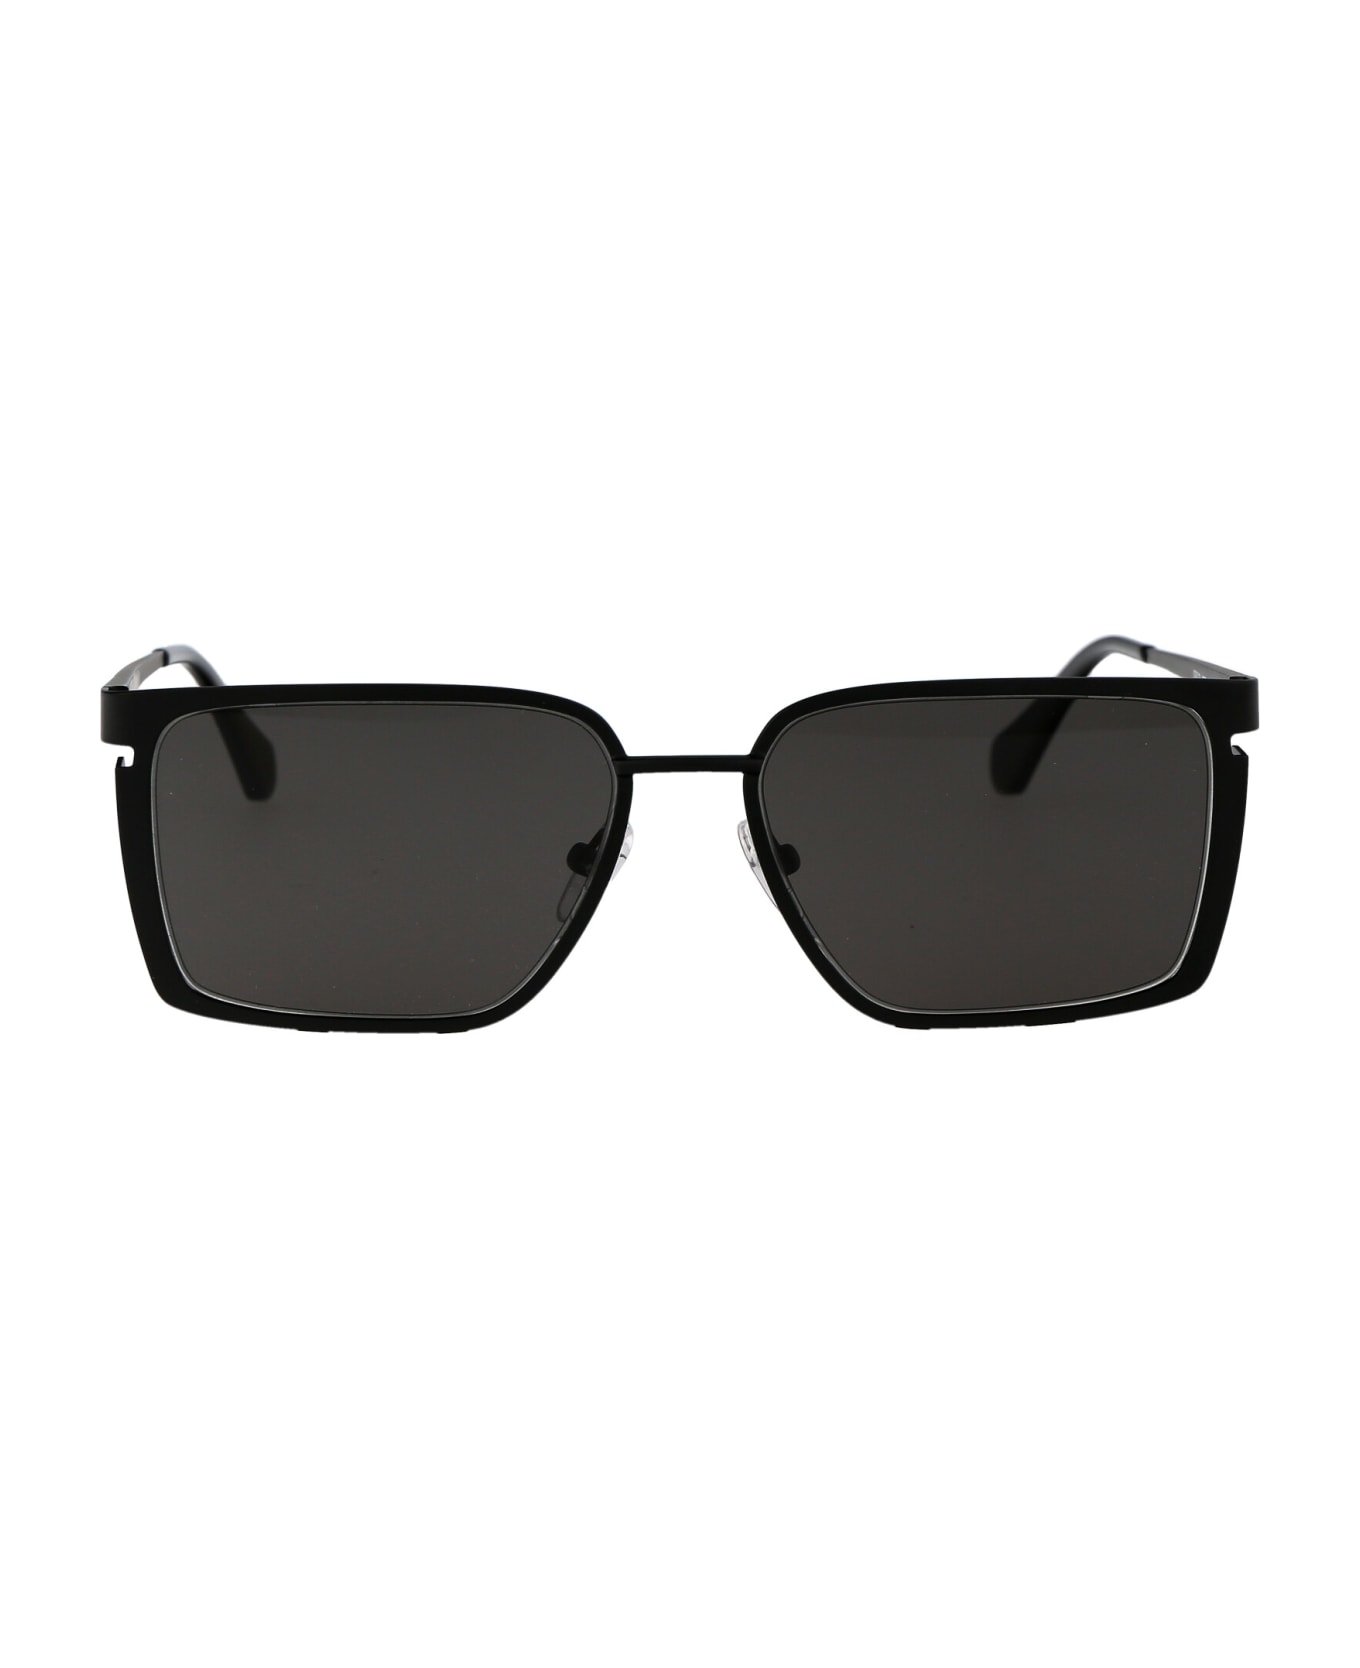 Off-White Yoder Sunglasses - 1007 BLACK